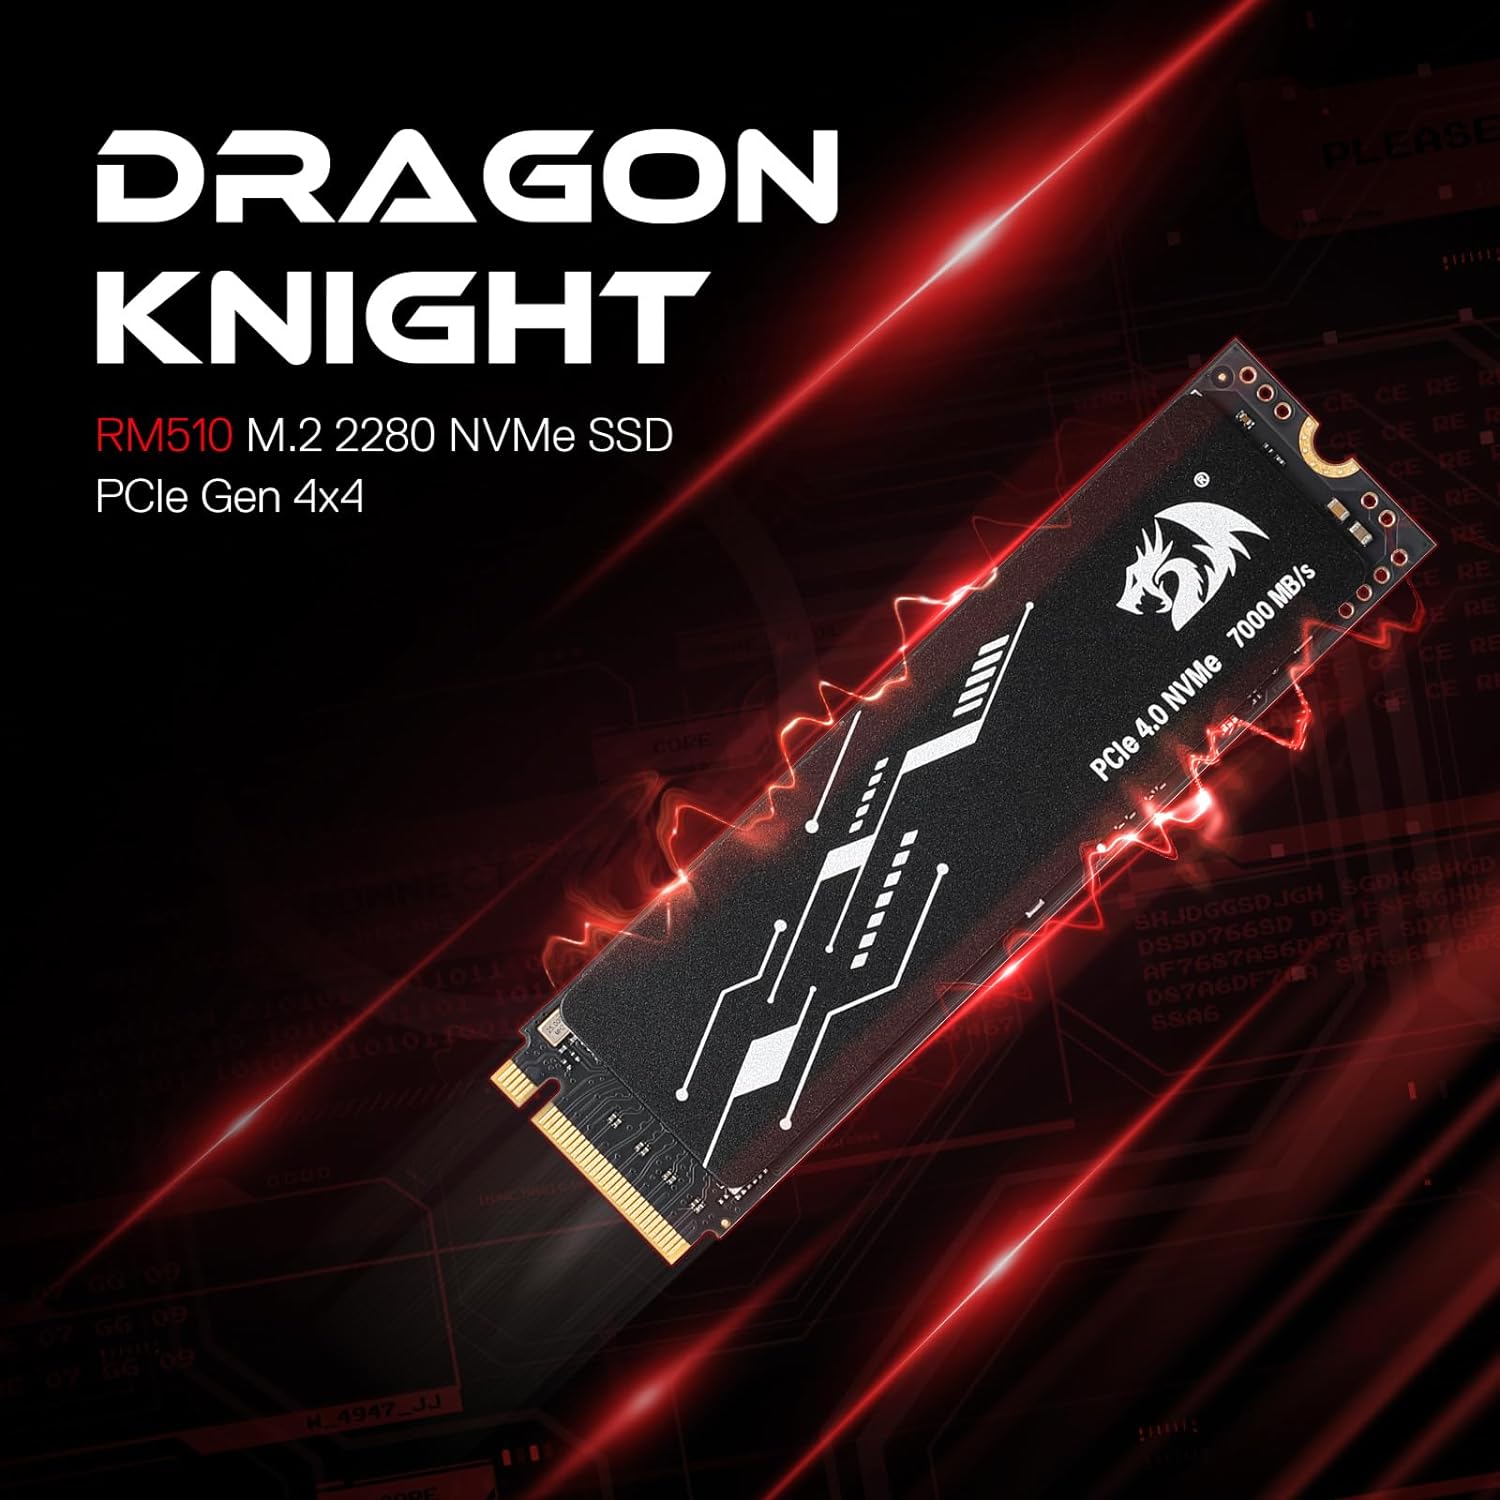 DRAGON KNIGHT 512 GB NVMe SSD